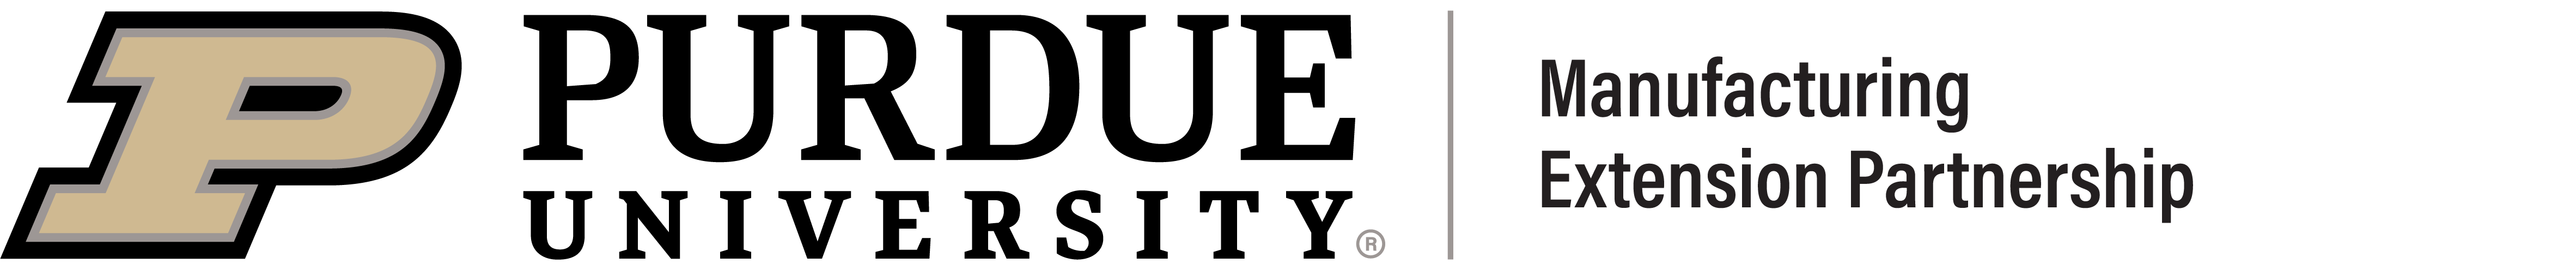 Logo of Purdue University Manufacturing Extension Partnership